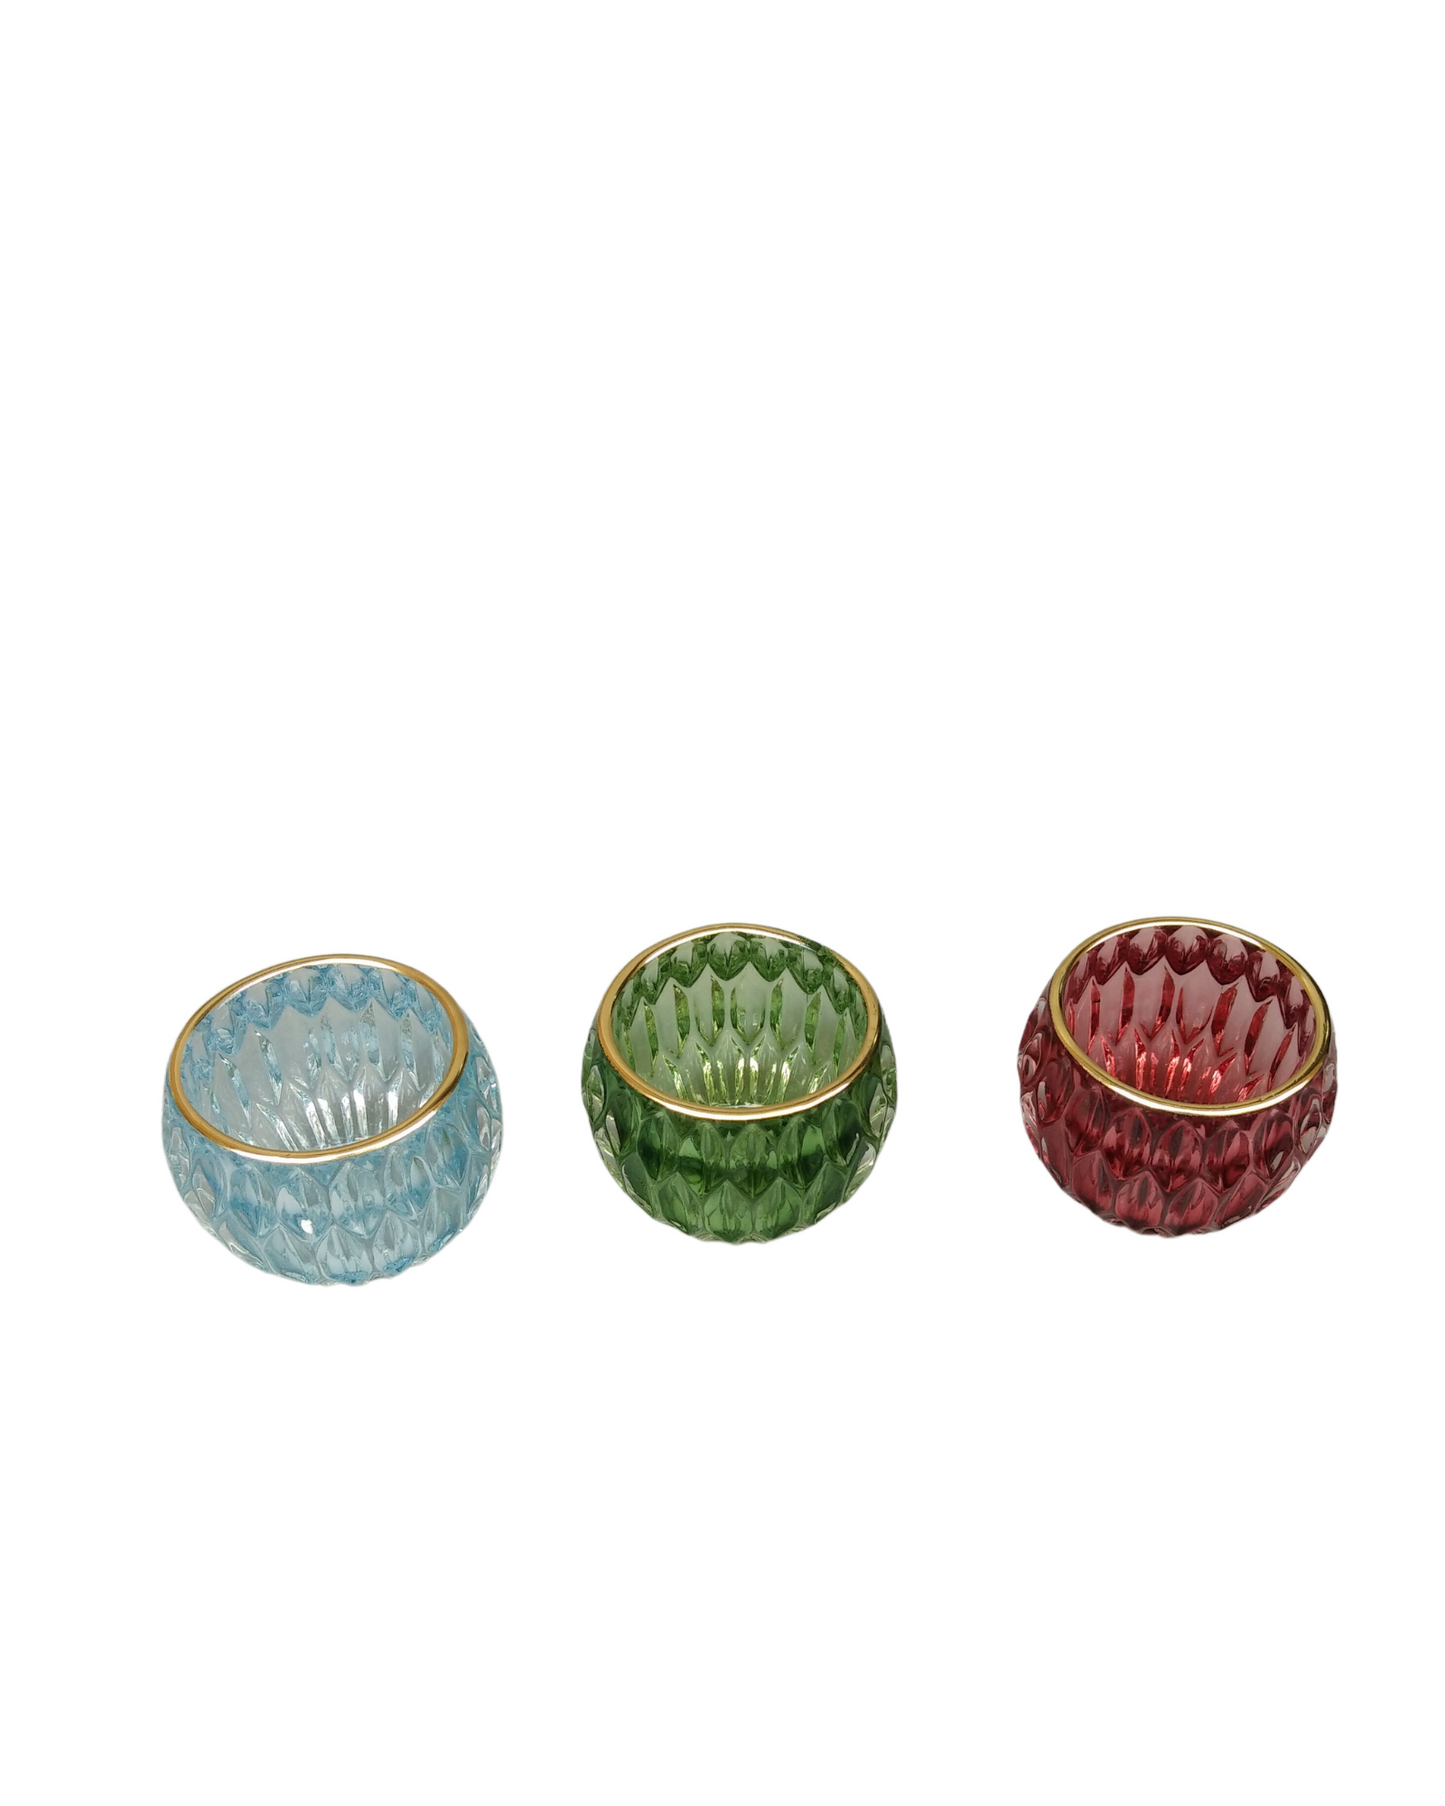 Pen Jar/Multifunction Crystal Jar - Available In 3 Color